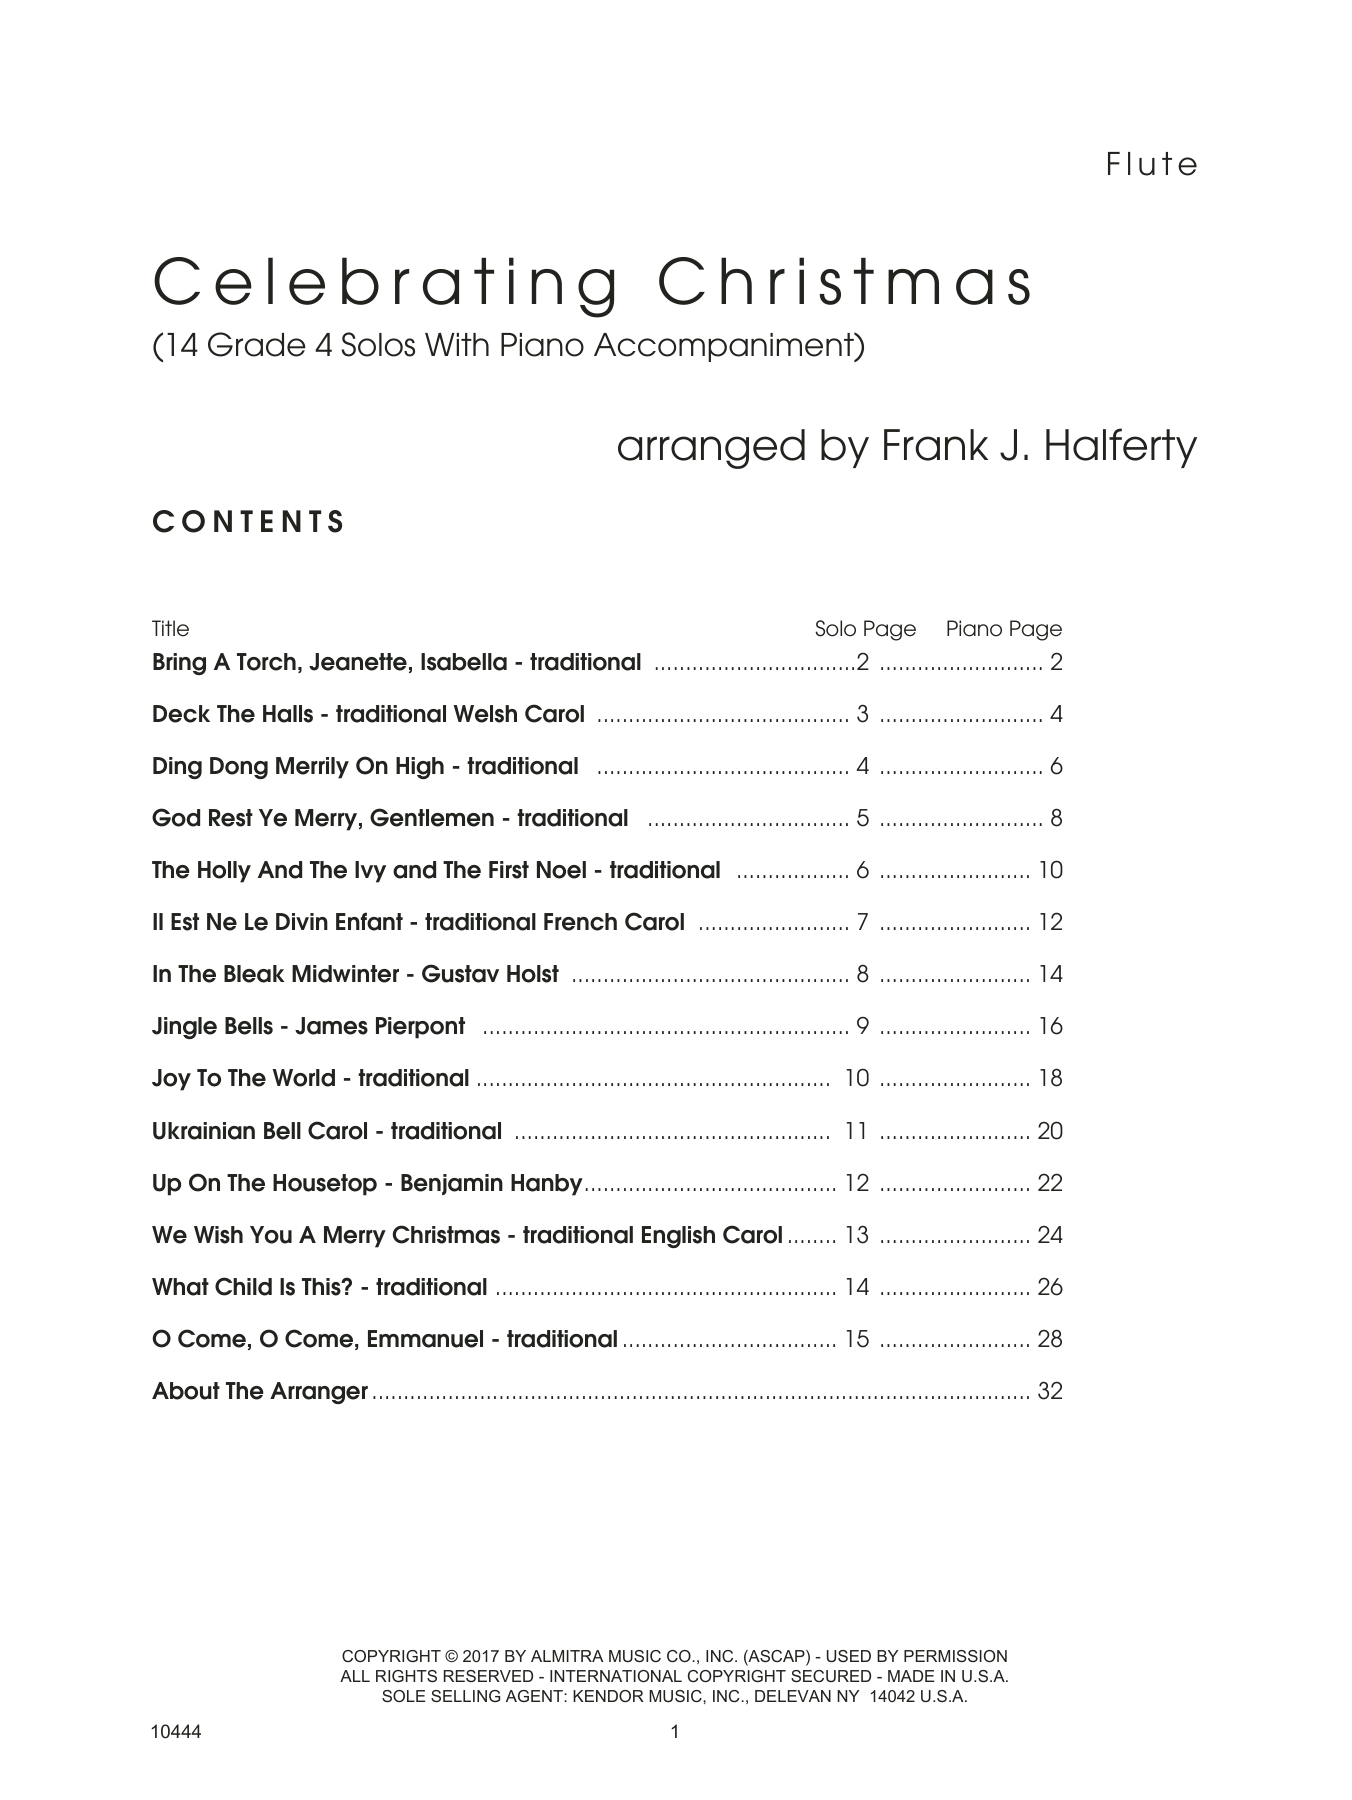 Download Frank J. Halferty Celebrating Christmas (14 Grade 4 Solos Sheet Music